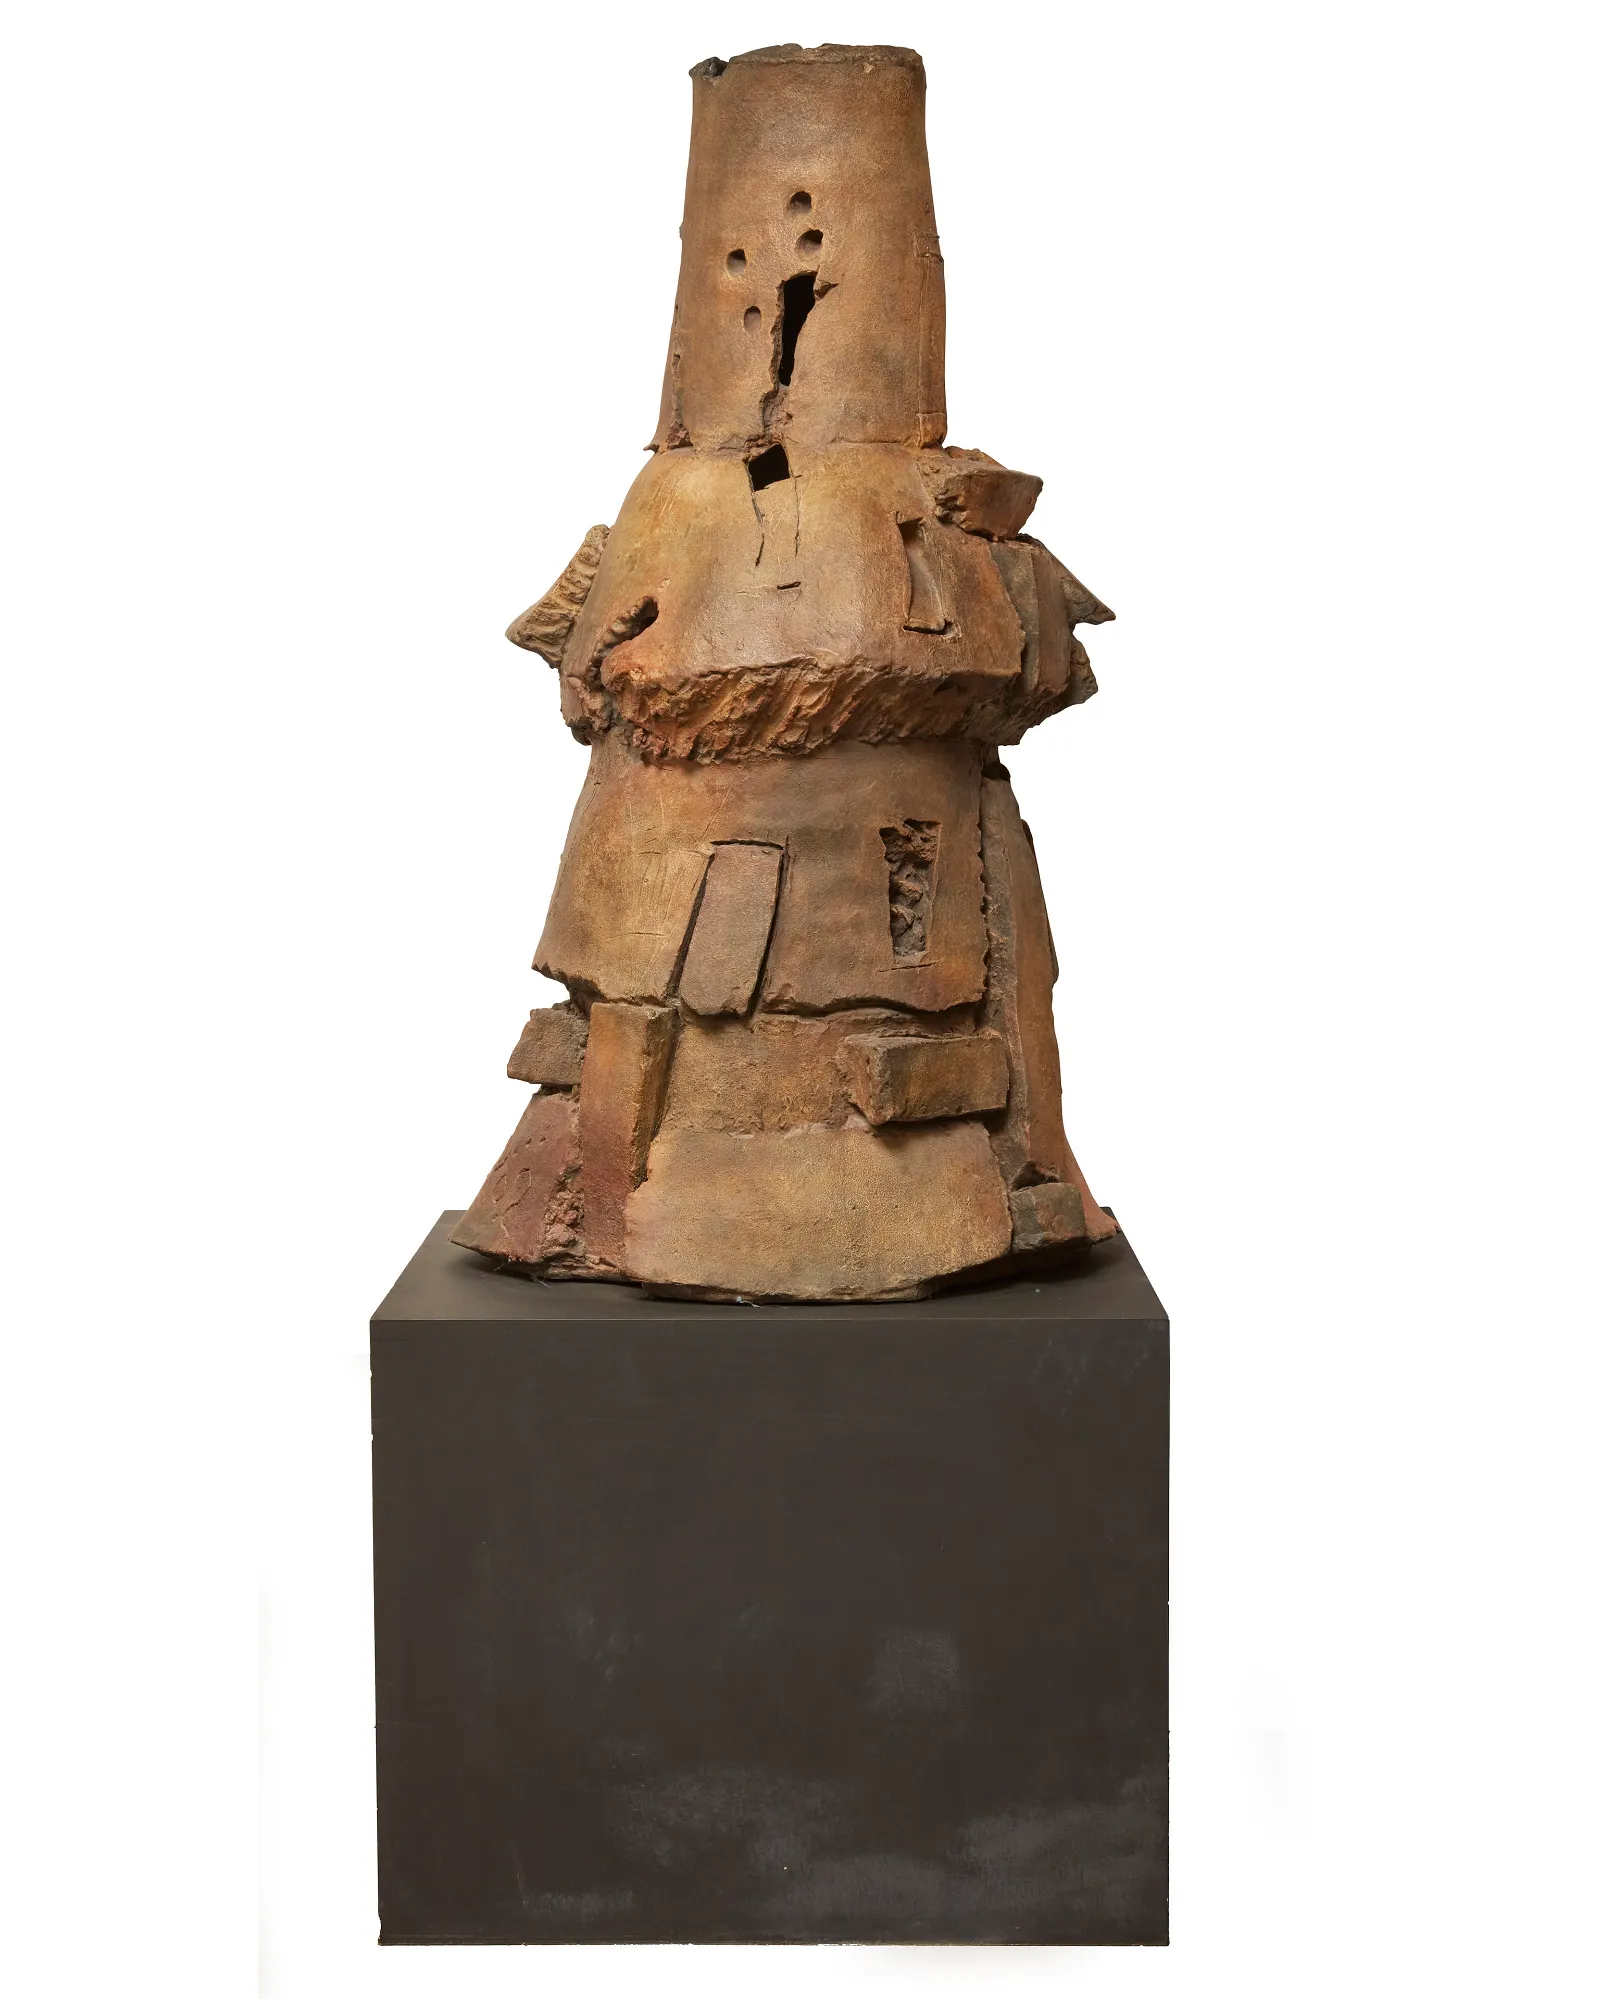 Peter Voulkos, Alegria, 2000. Cast bronze, estimate $60,000-$80,000 at John Moran Auctioneers.